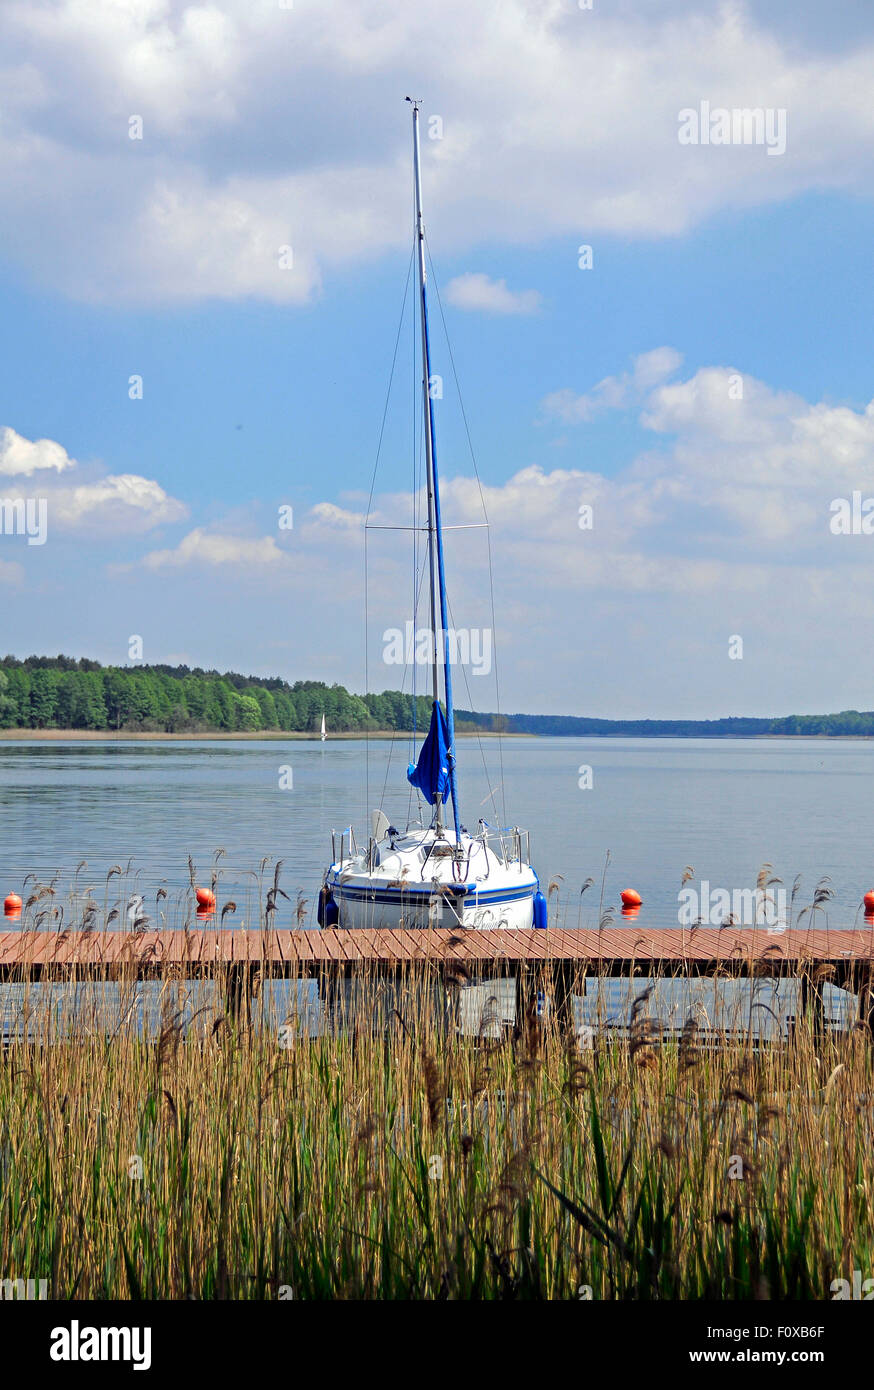 Sailing boat moored in small marina on Powidz lake, Poland Stock Photo